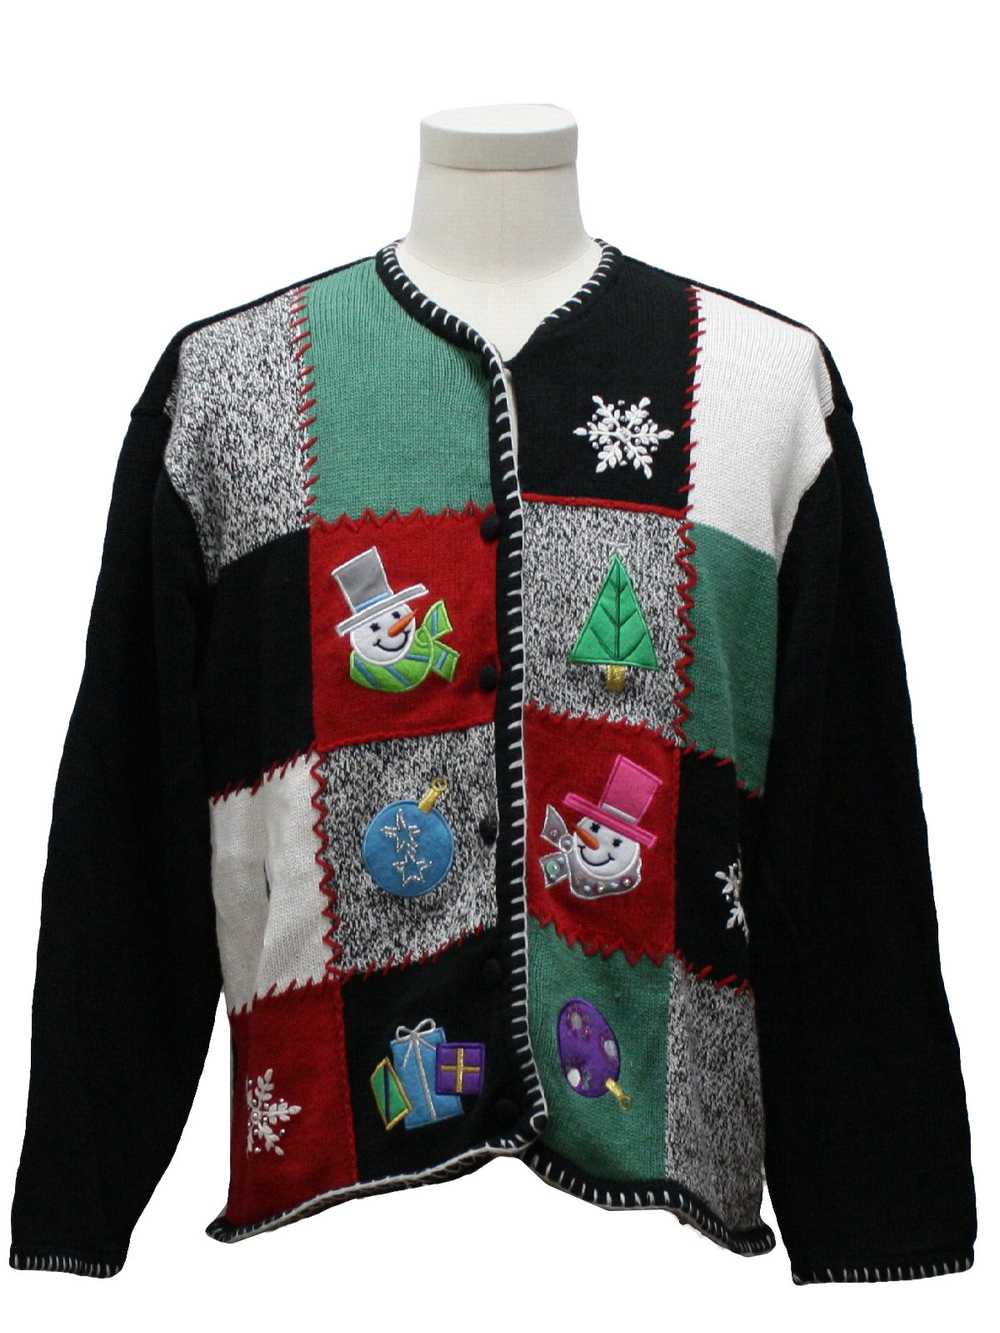 Crystal Kobe Womens Ugly Christmas Sweater - image 1